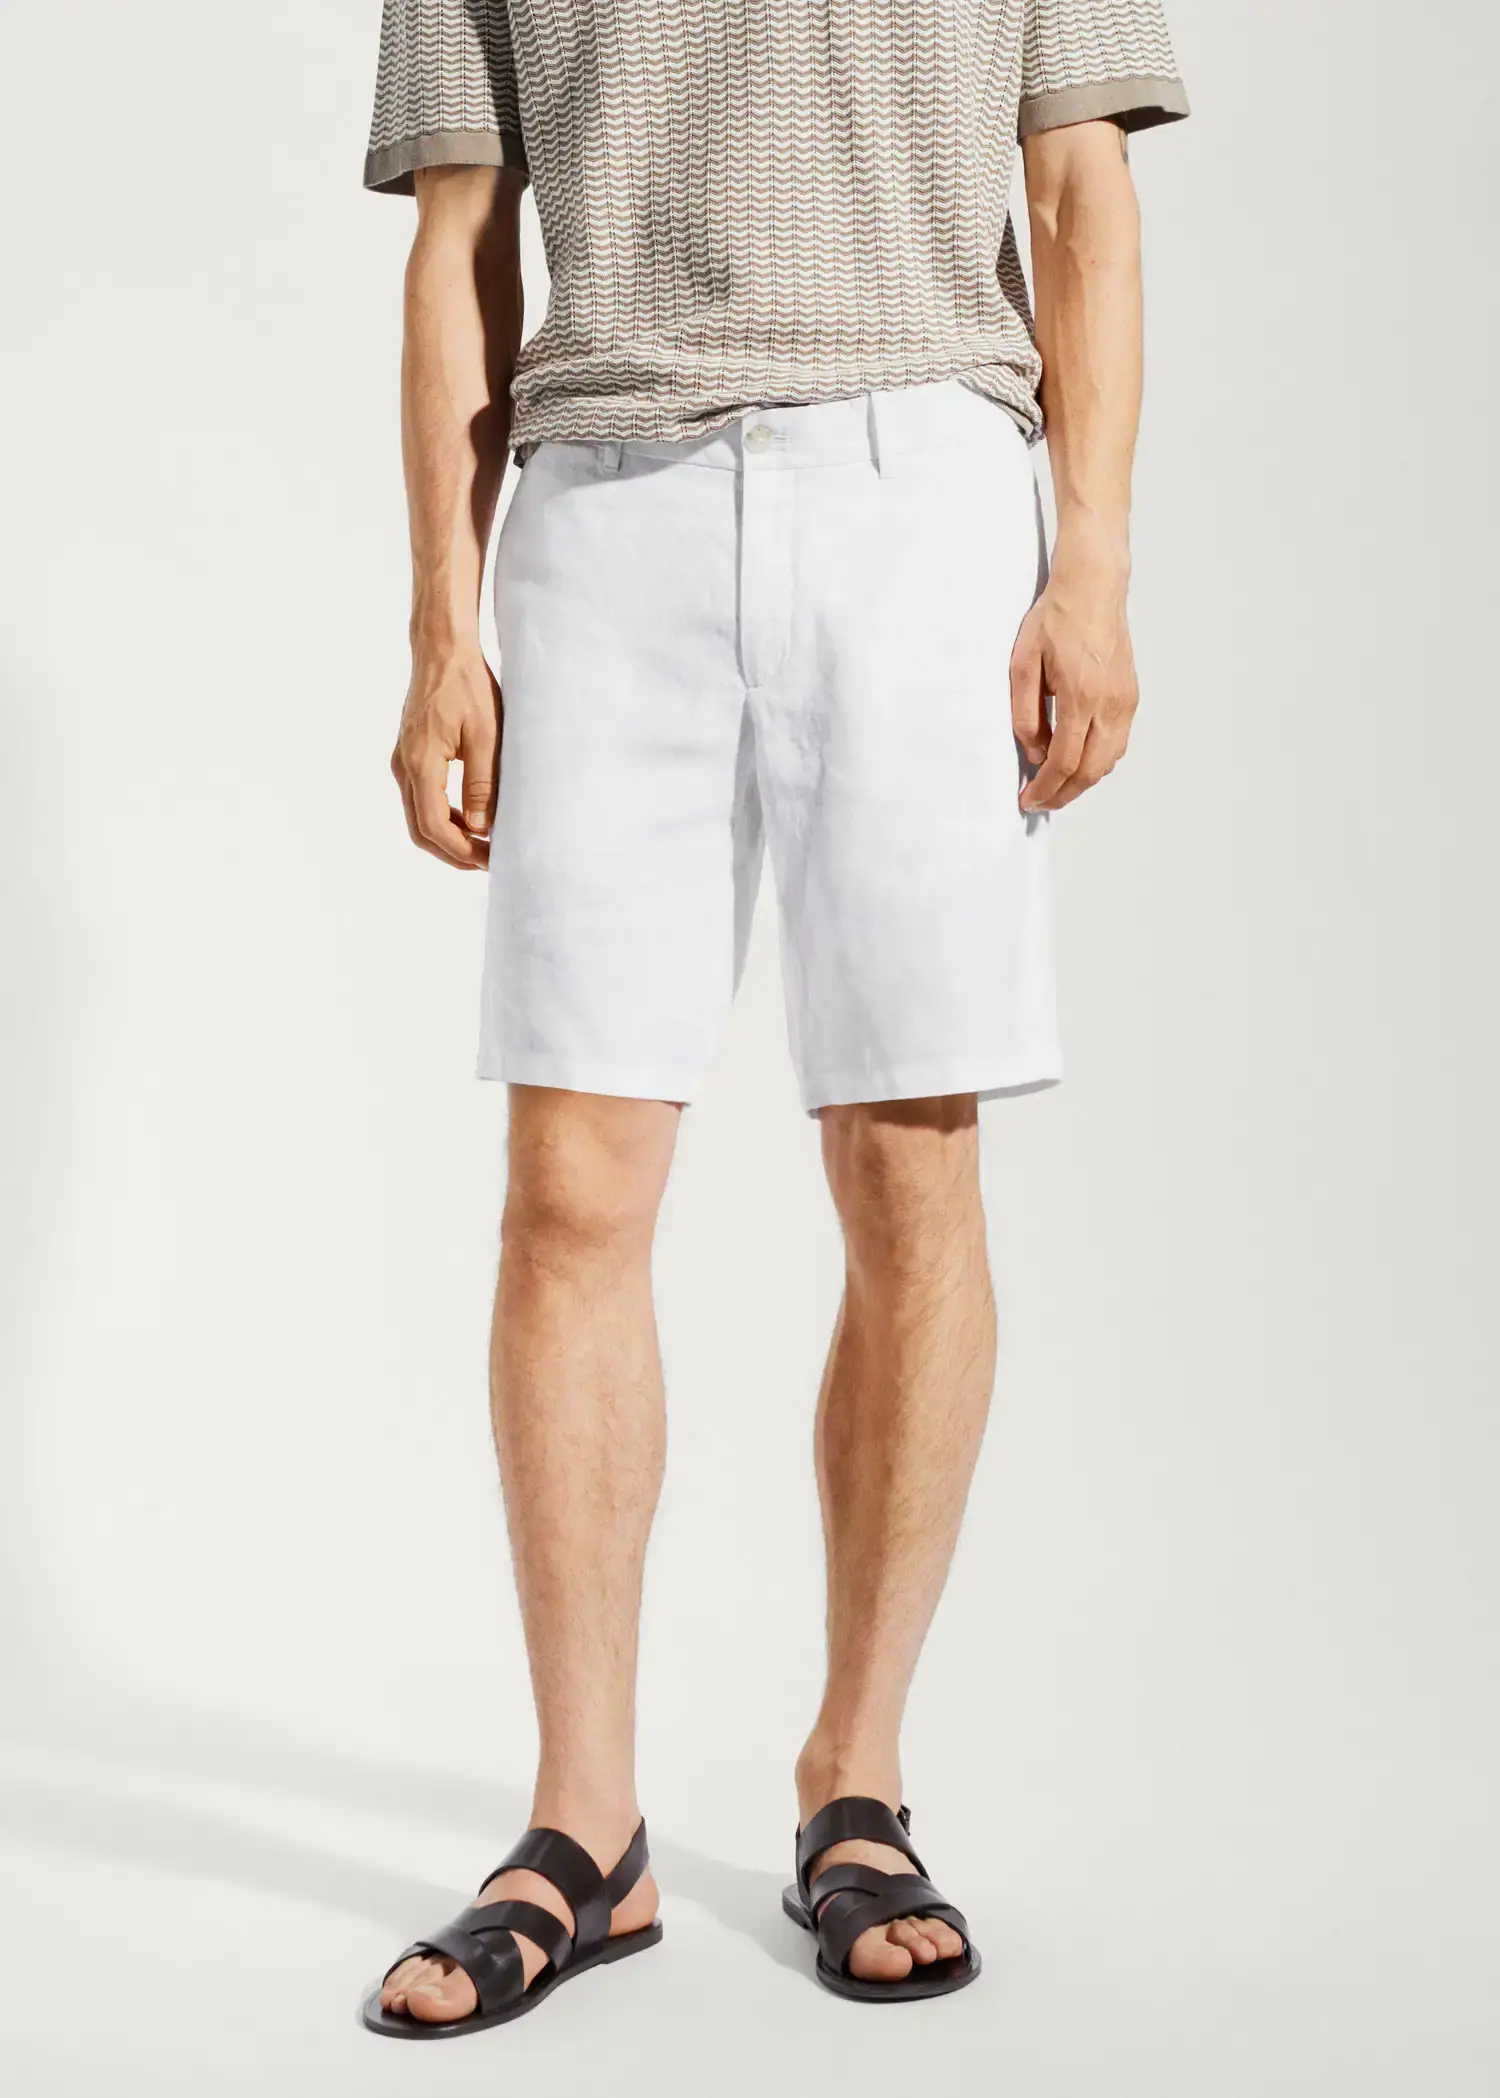 Mango 100% linen shorts. a man in white shorts and a gray shirt. 